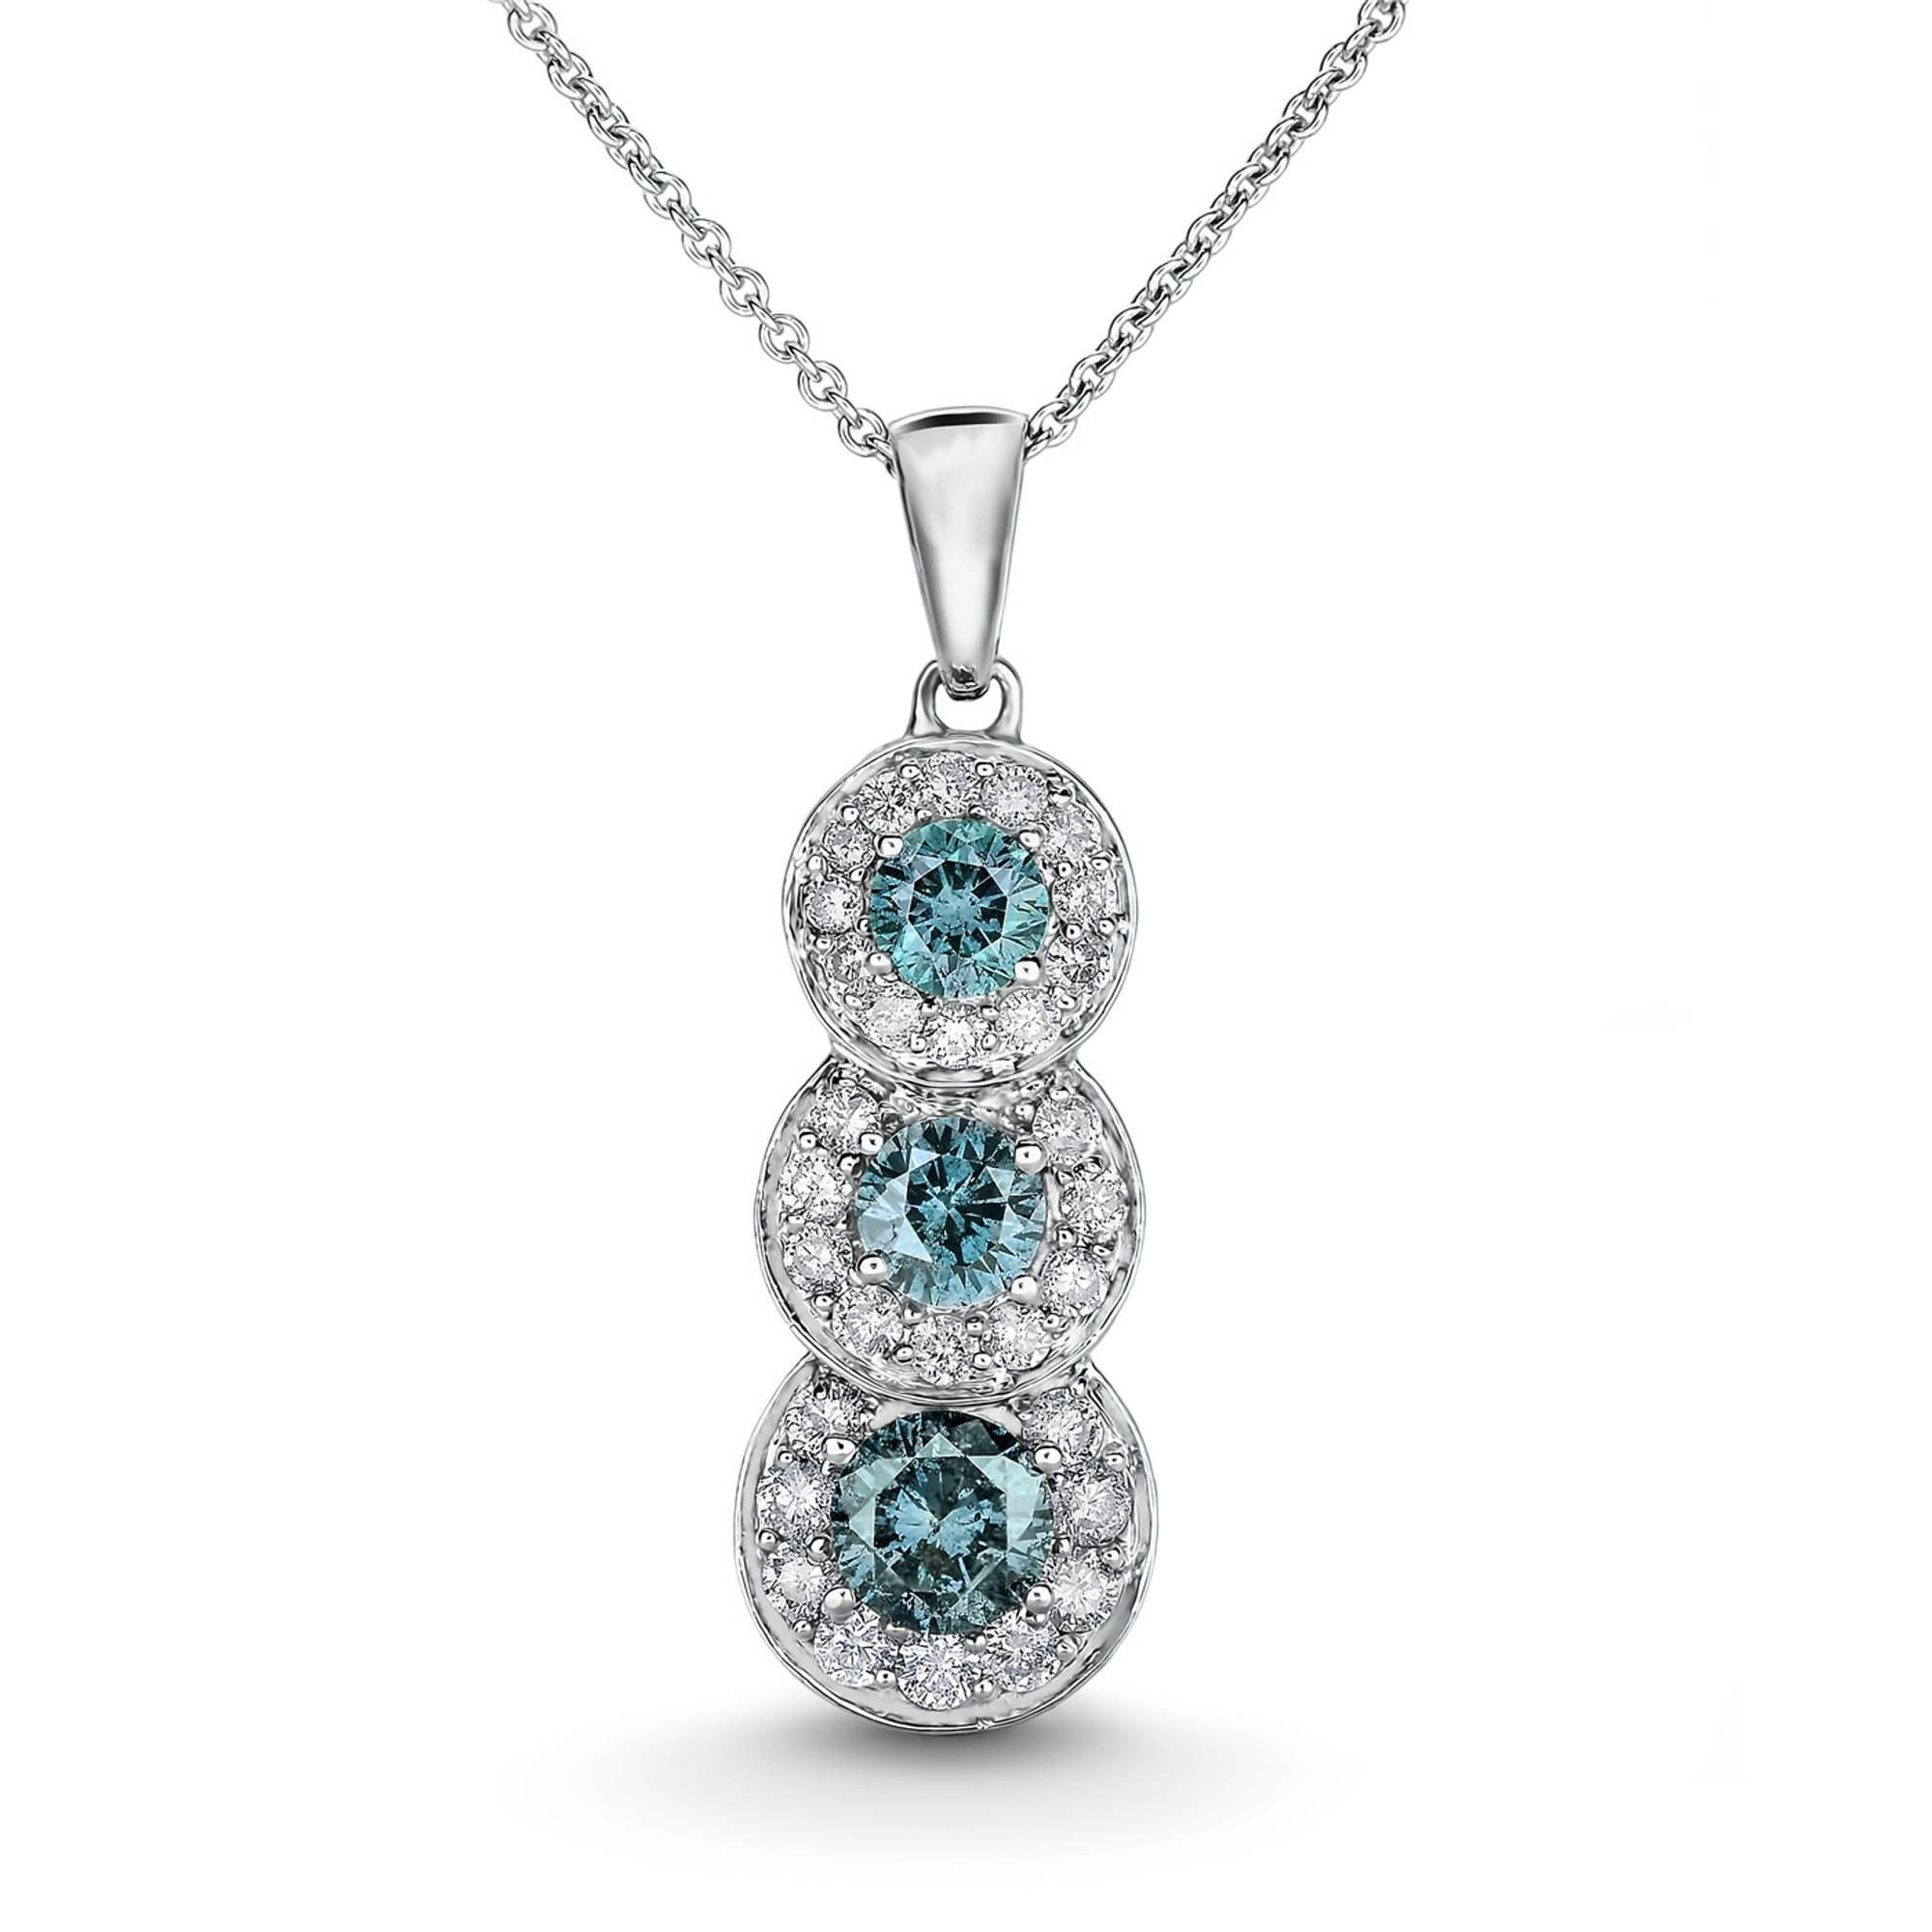 Adjustable Necklace with Blue Square Stone | APM Monaco